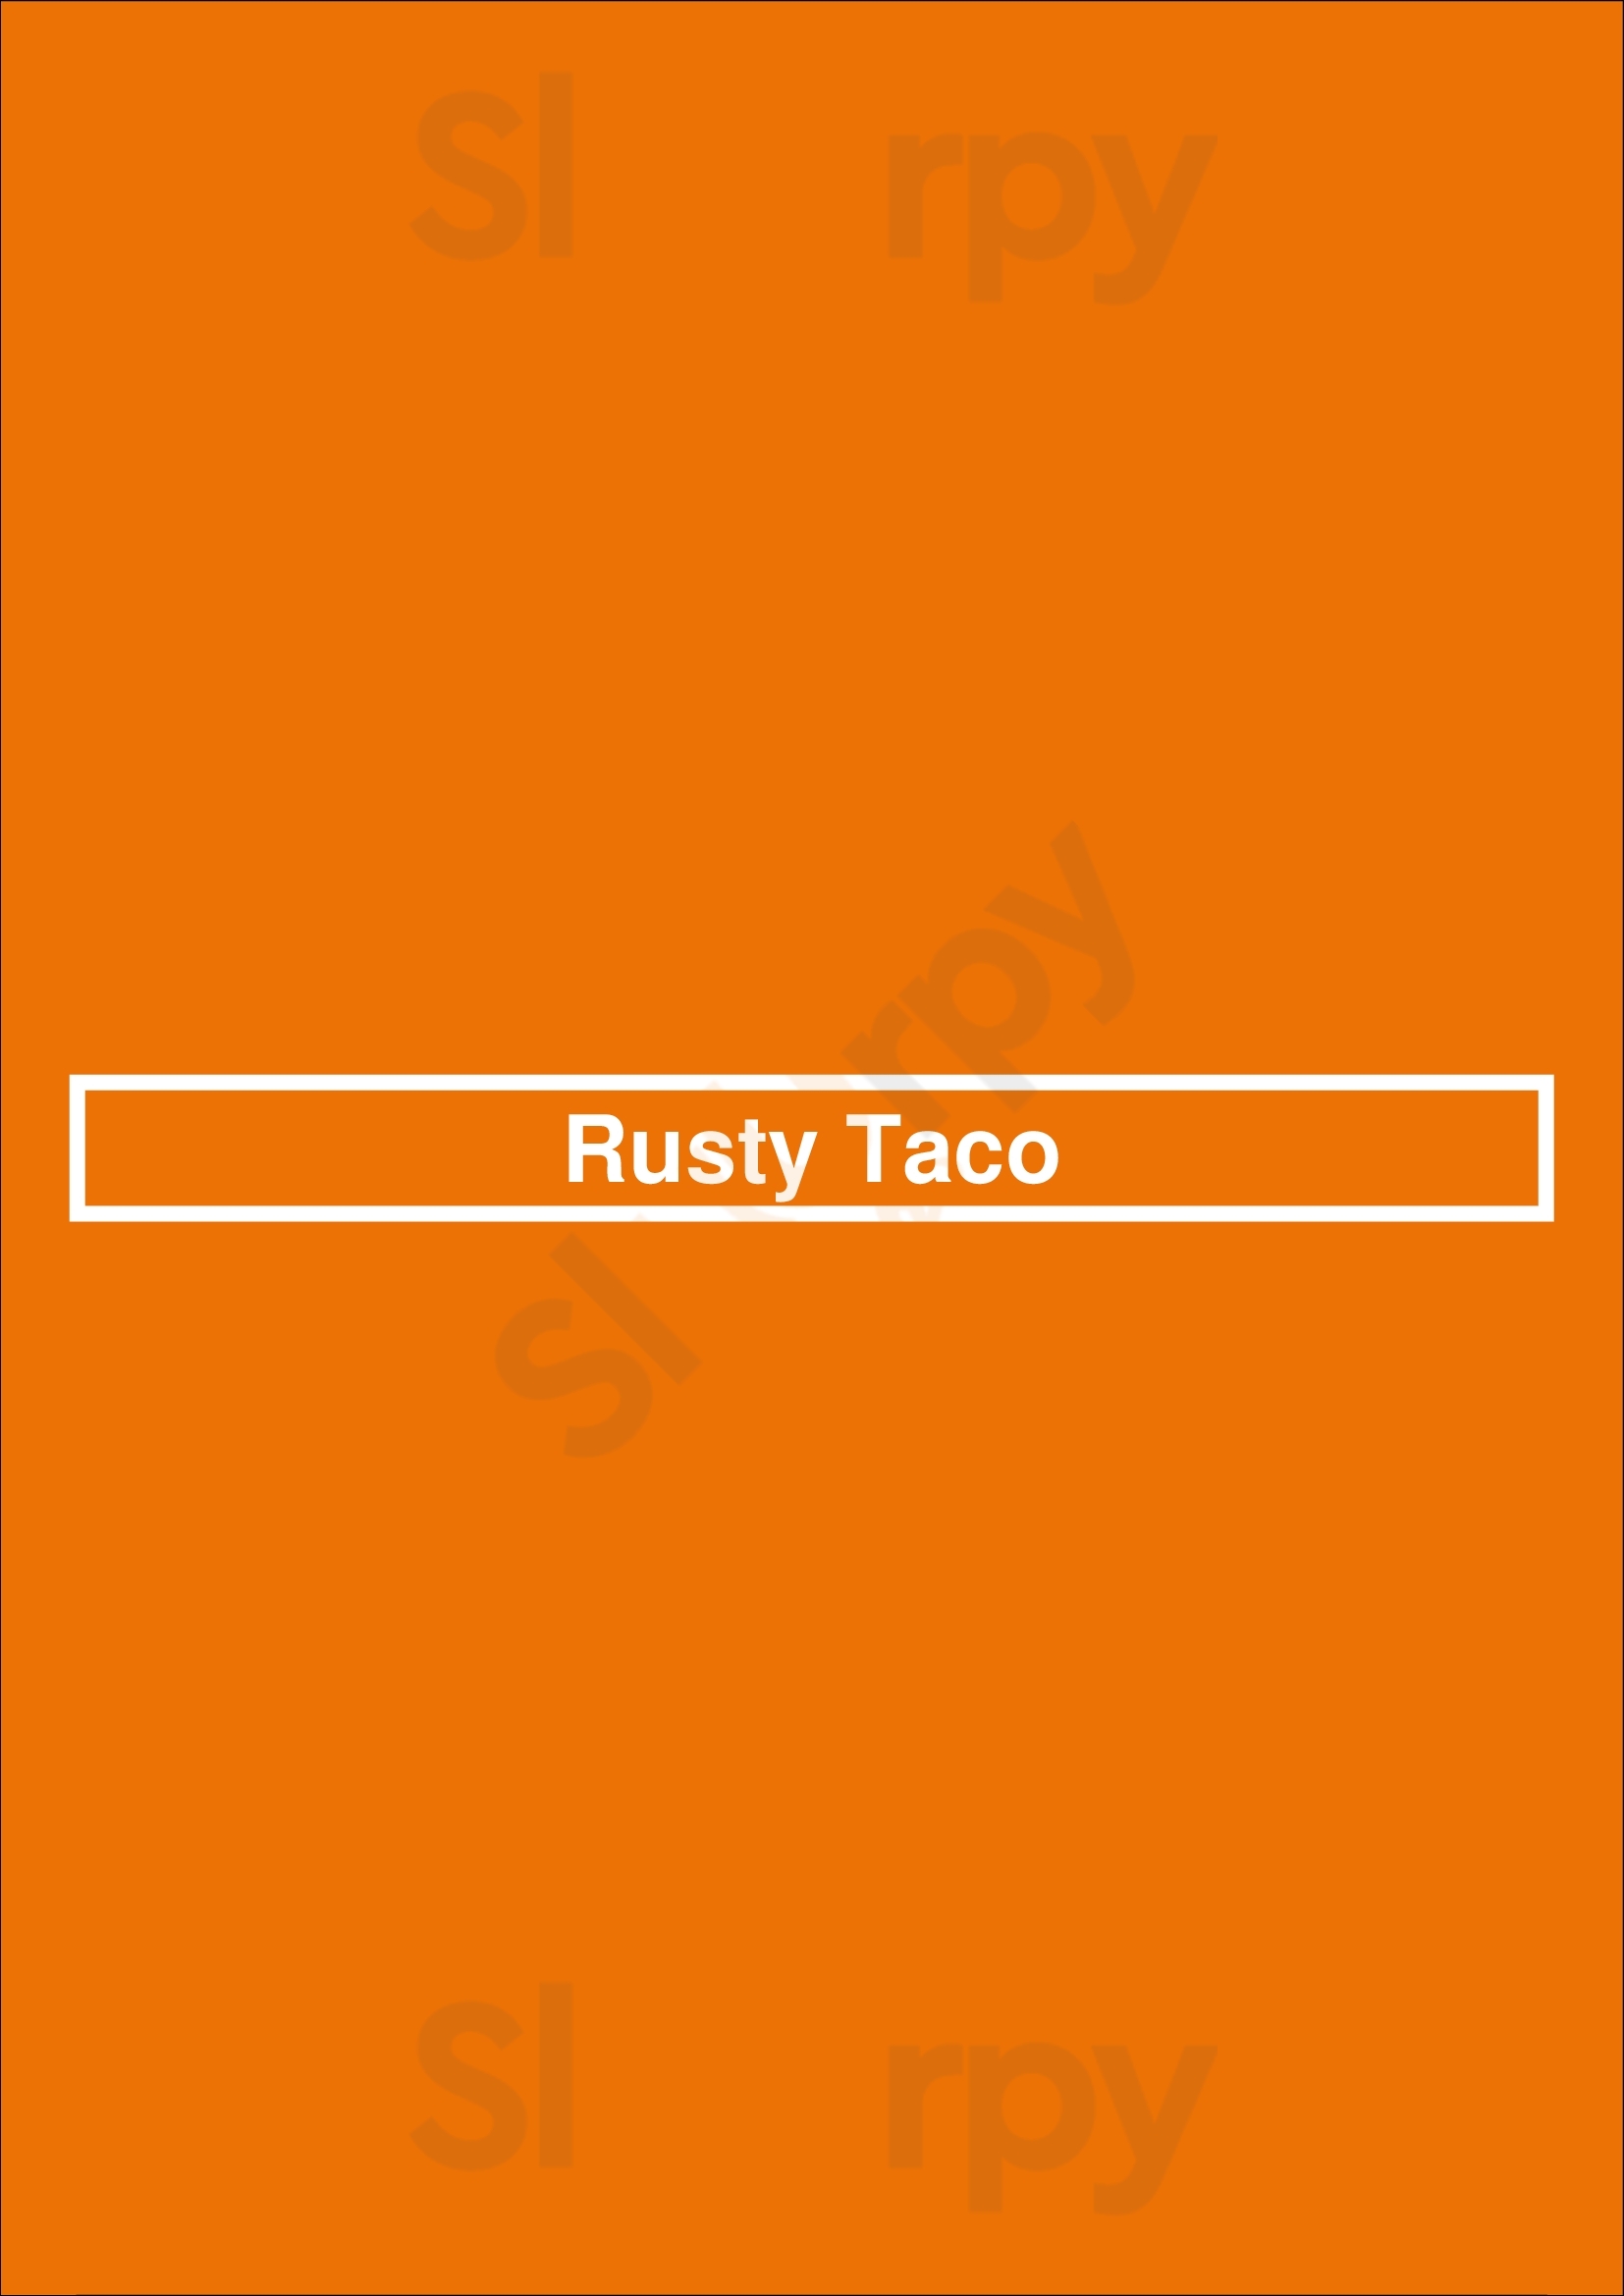 Rusty Taco Maumee Menu - 1